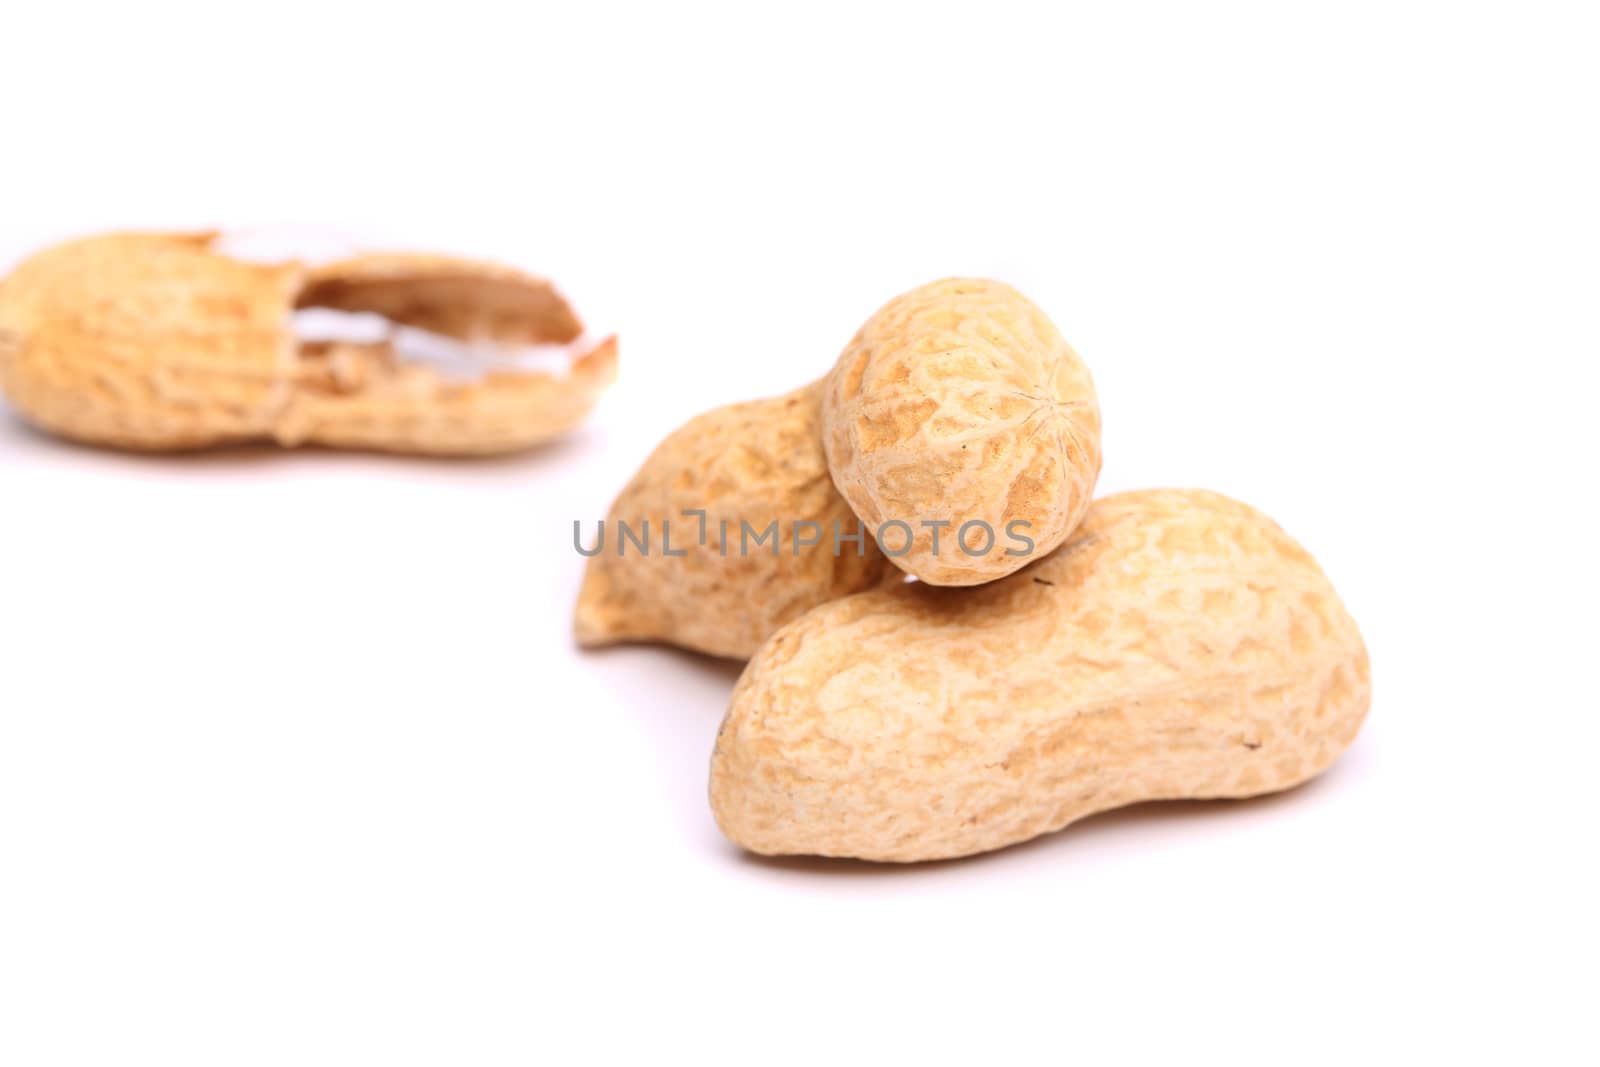 Three peanuts in closeup and peel by indigolotos